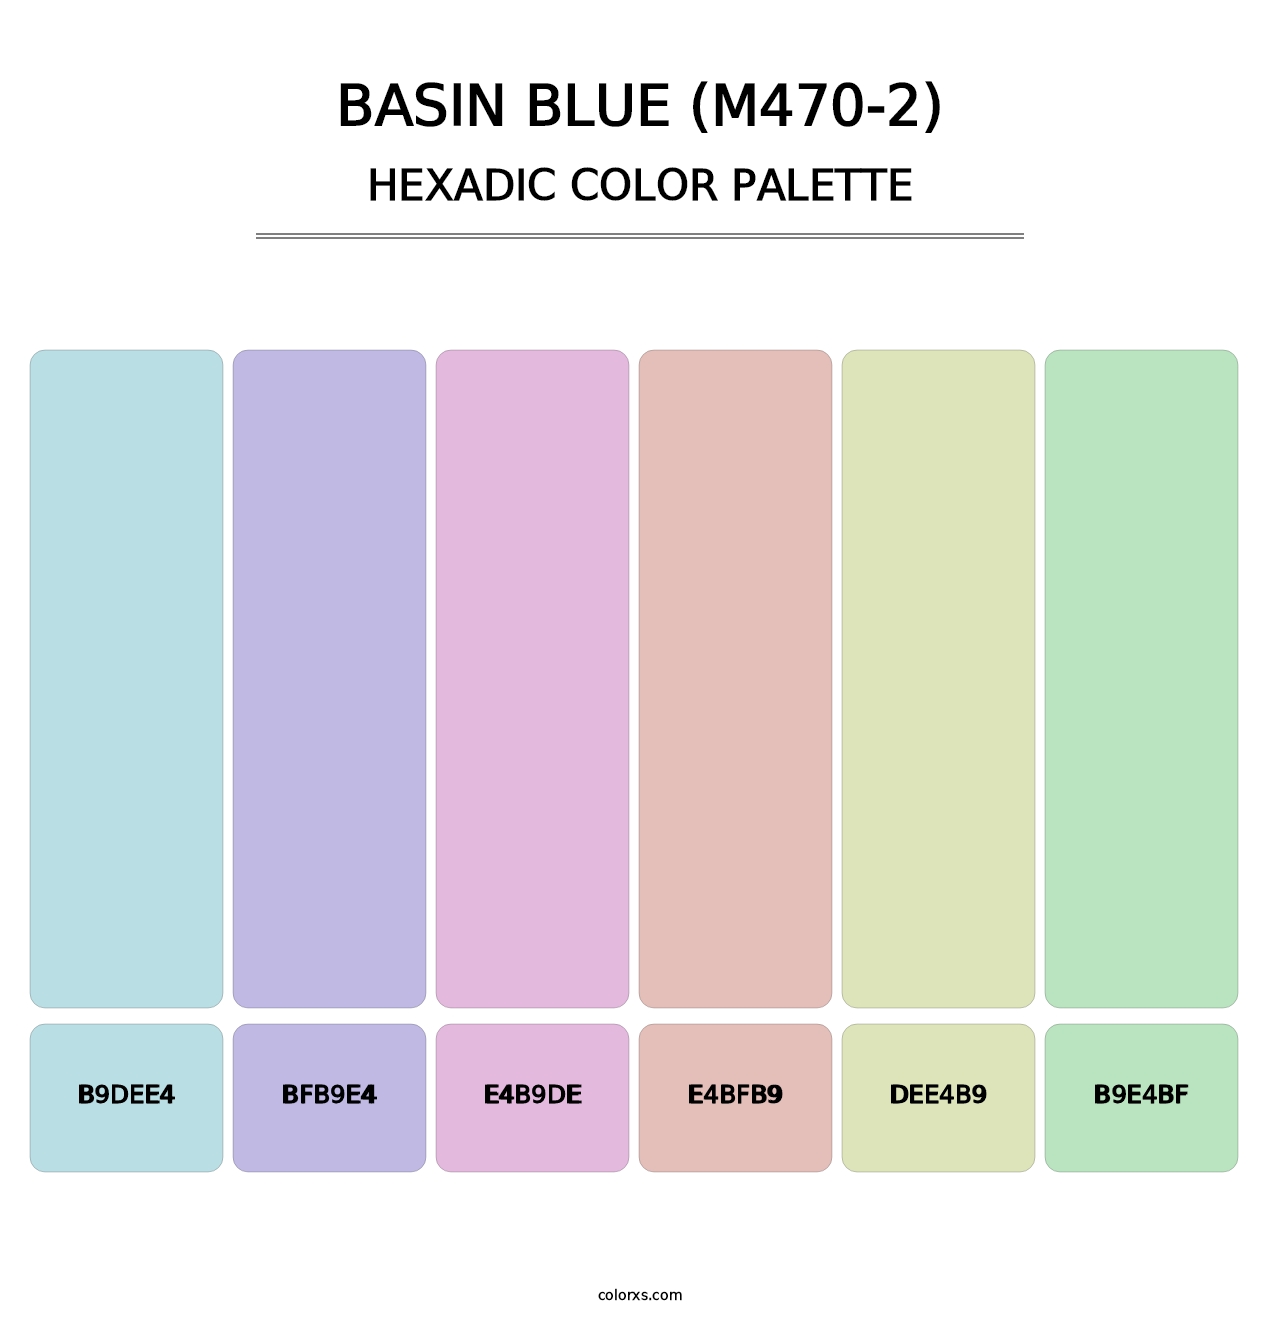 Basin Blue (M470-2) - Hexadic Color Palette